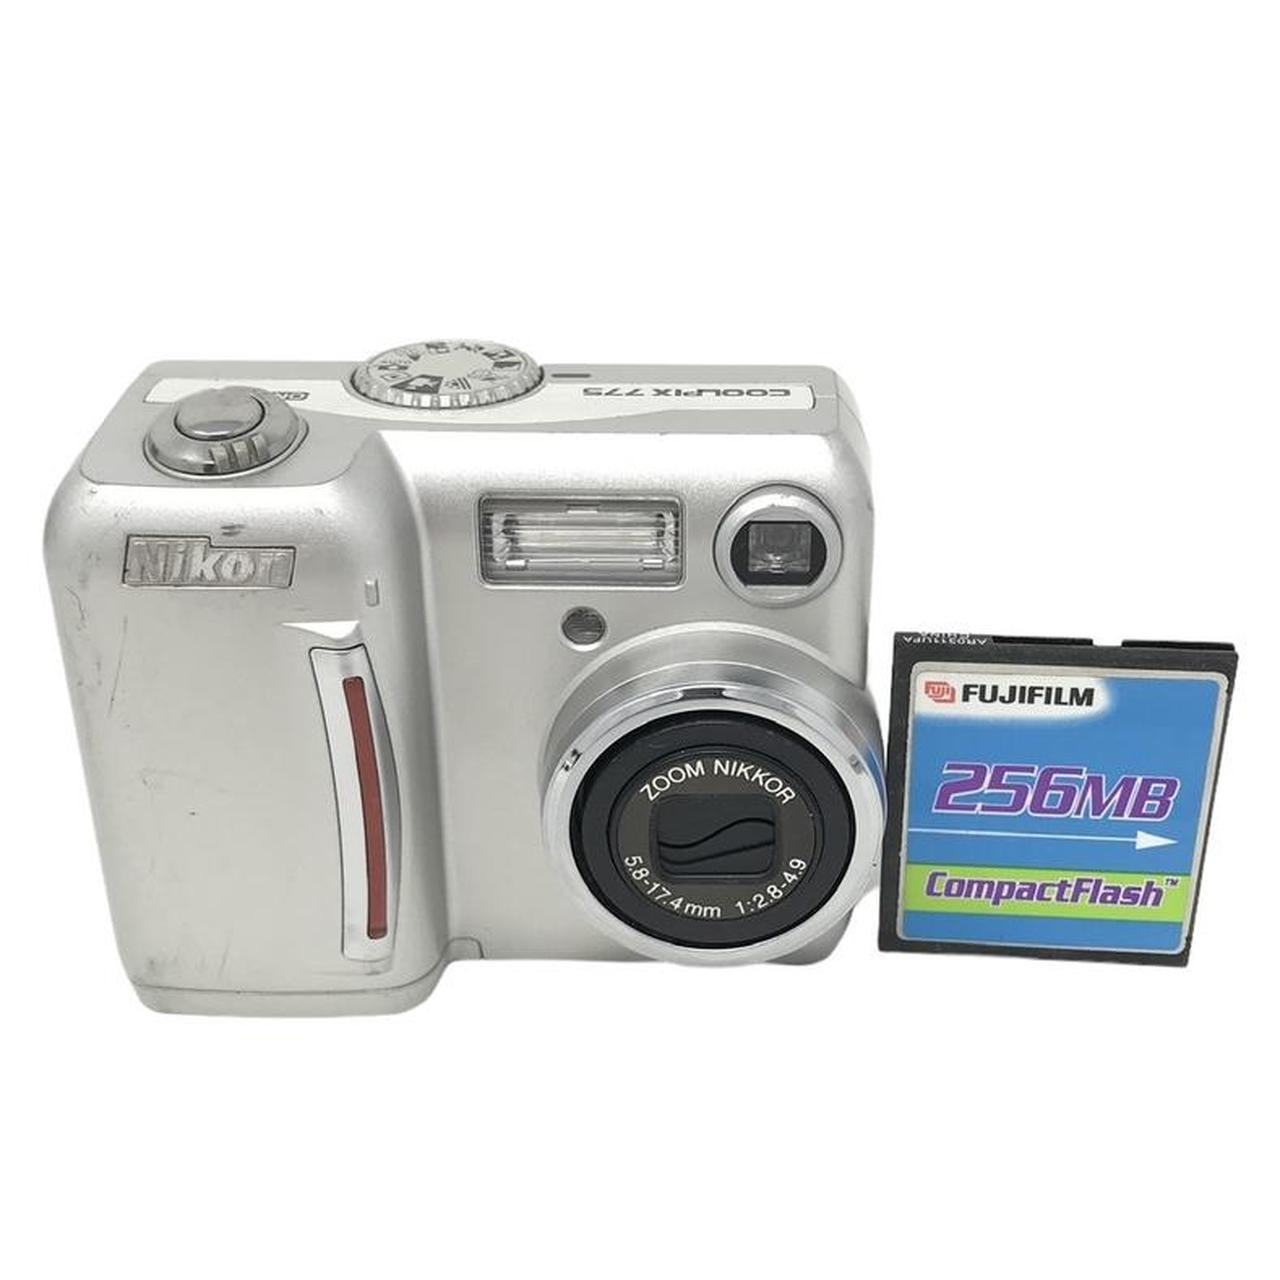 Product Image 1 - Nikon Coolpix 775 Digital Camera

Comes